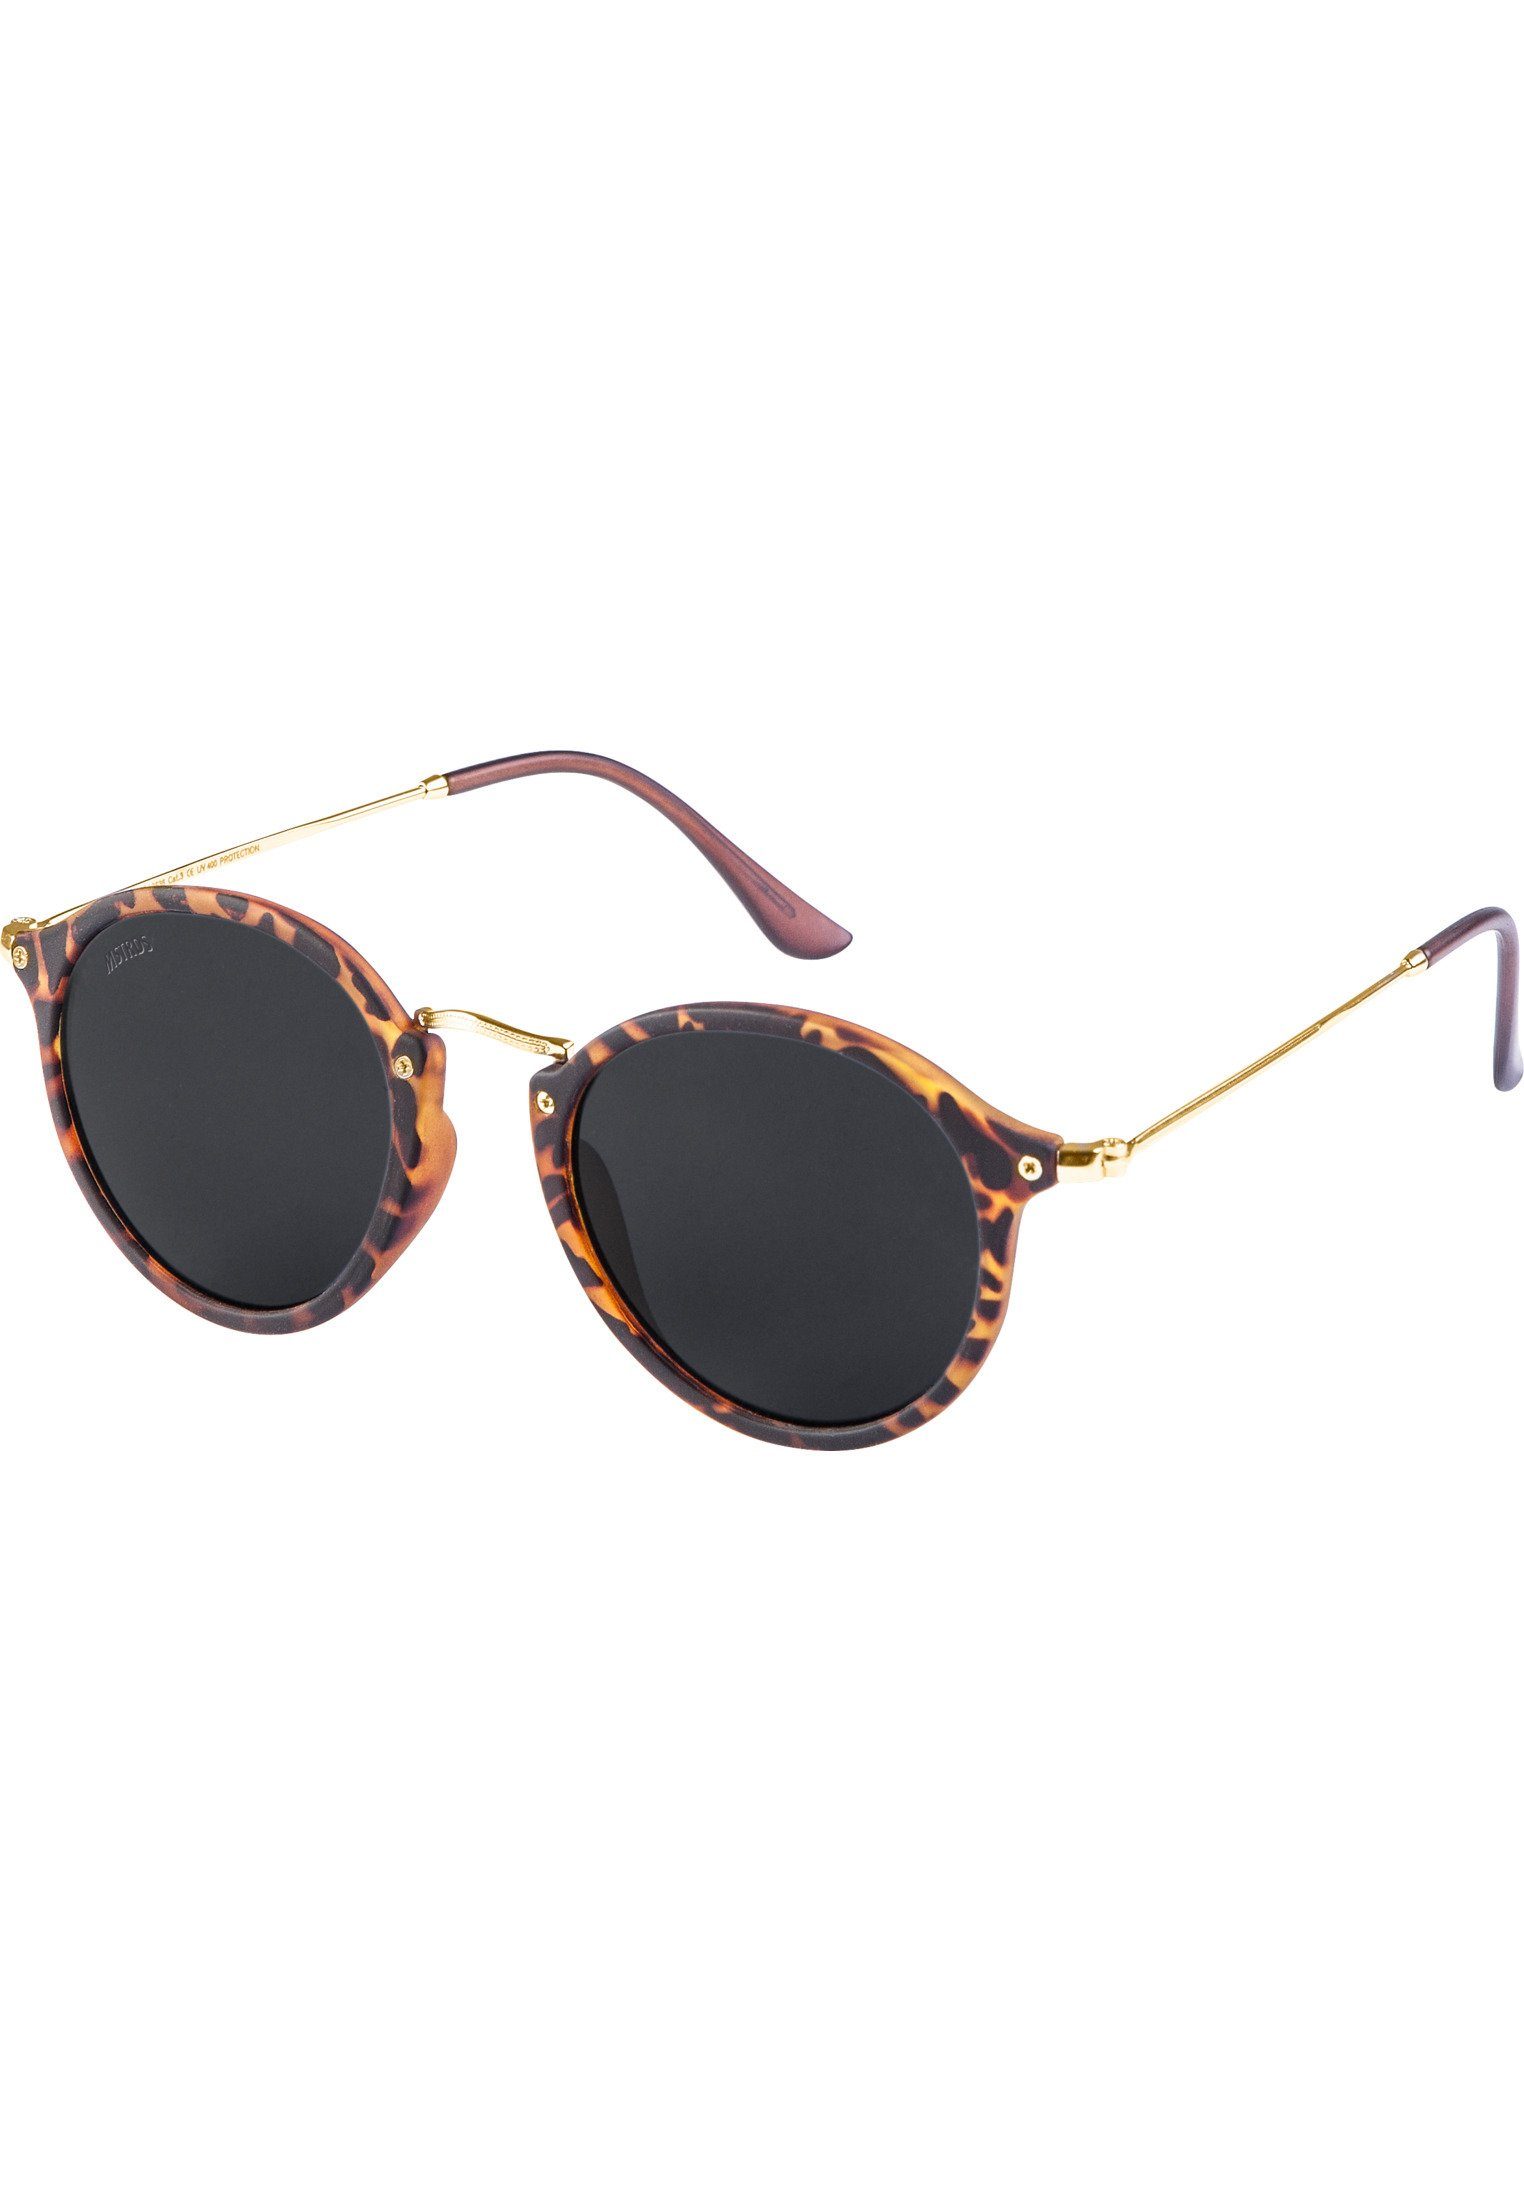 Sunglasses havanna/grey Accessoires MSTRDS Sonnenbrille Spy